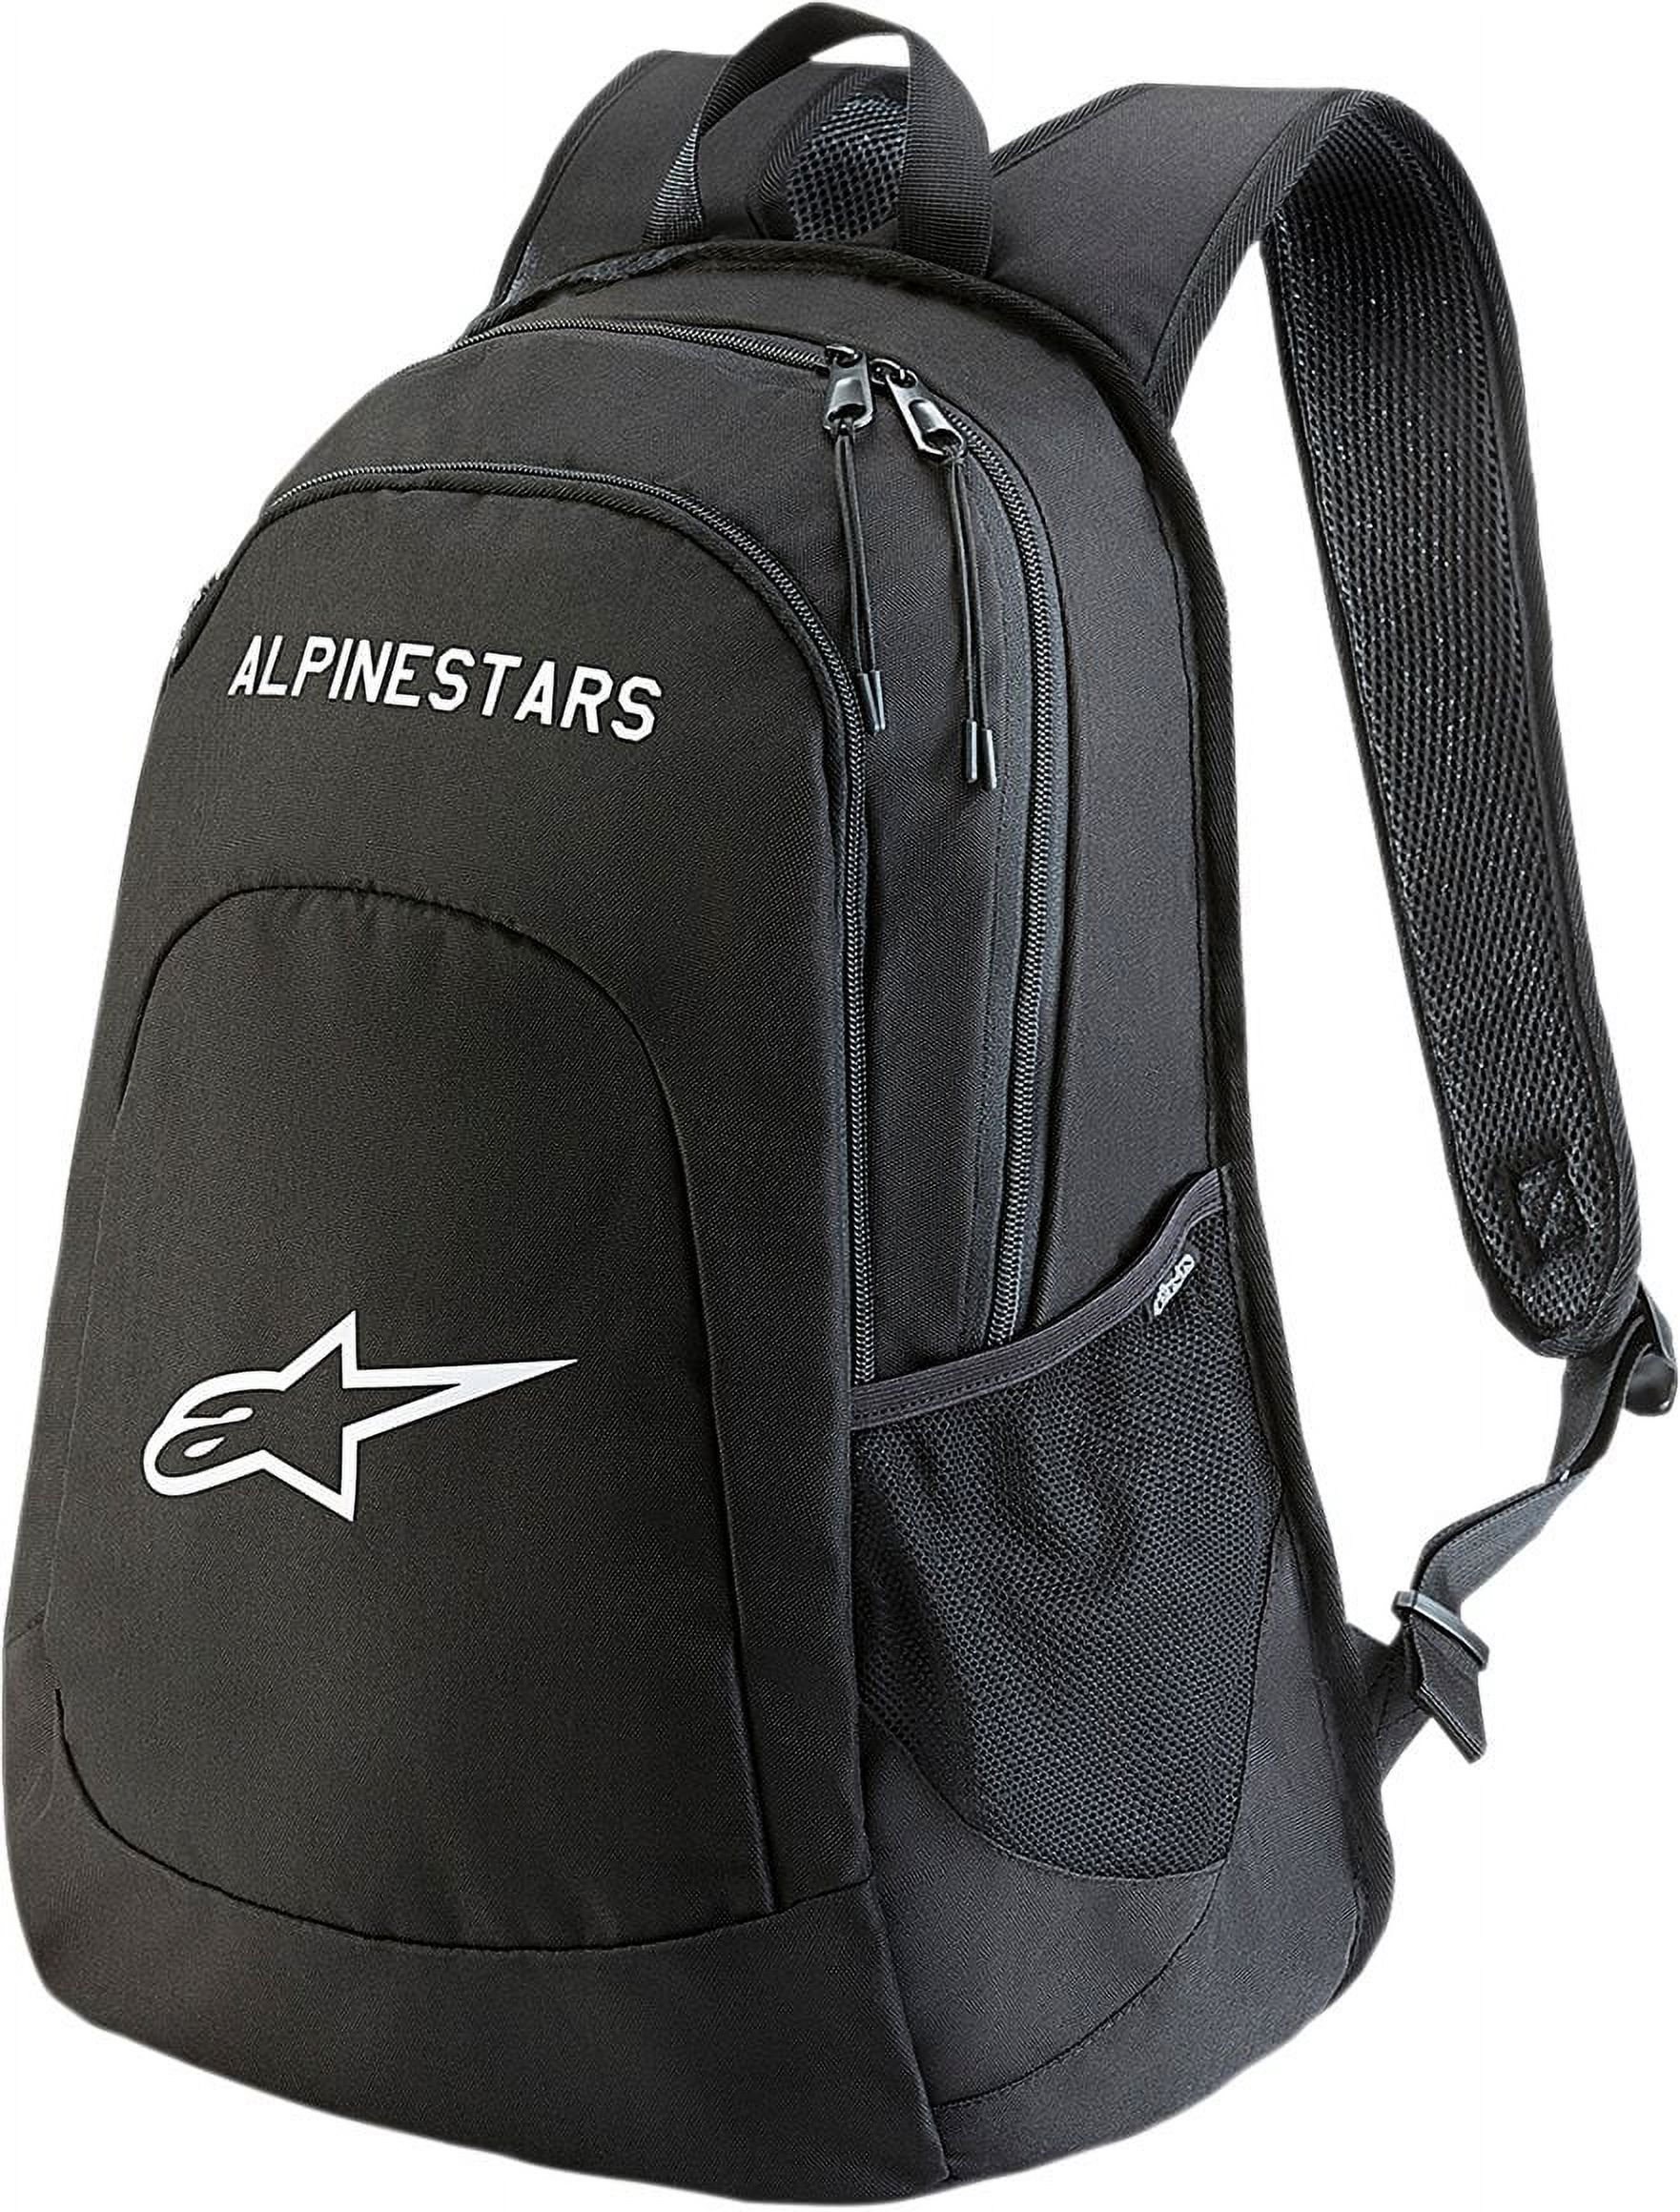 Alpinestars Defcon Backpack - Black/White - image 1 of 2